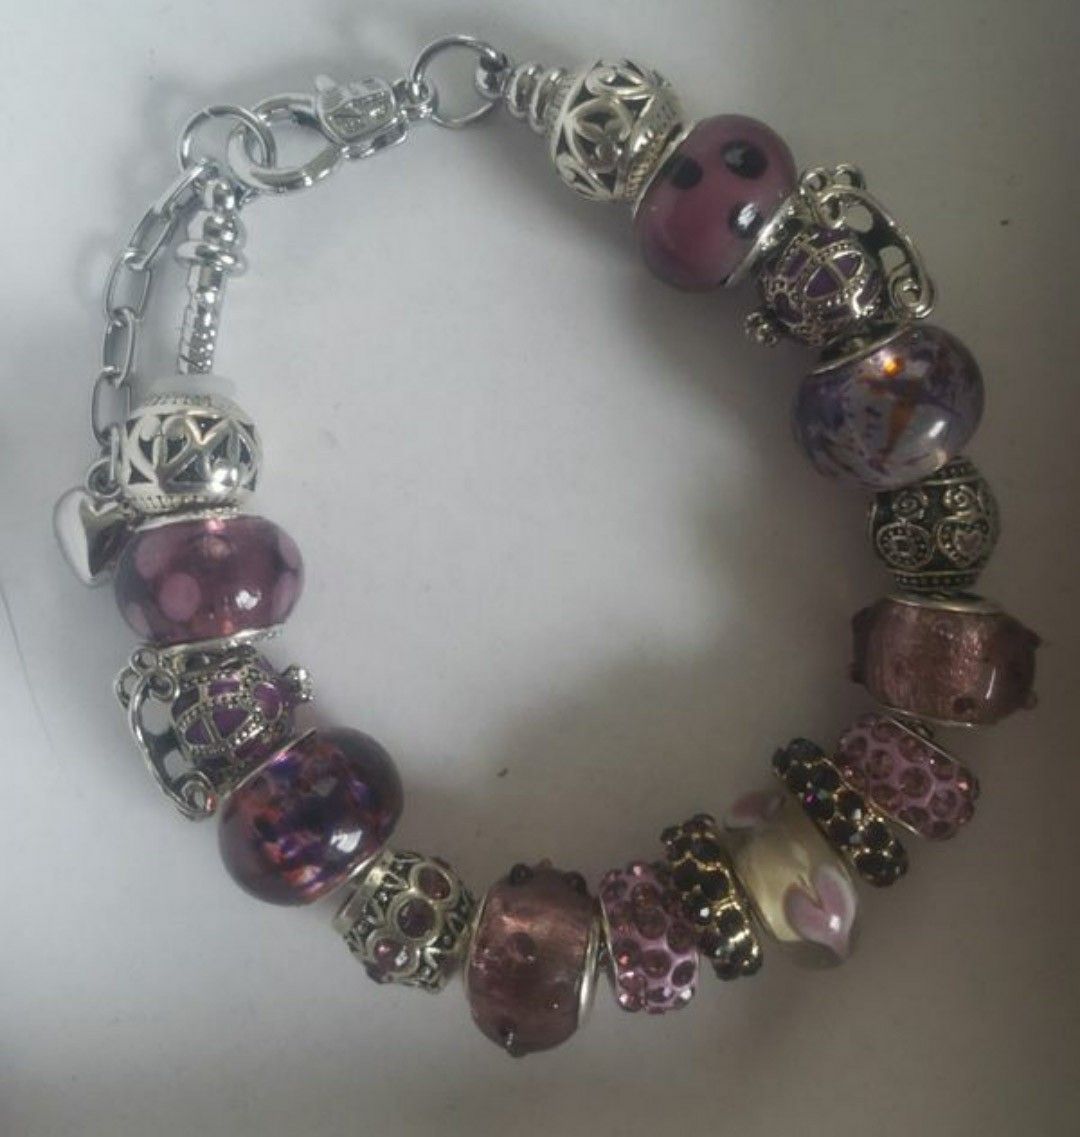 Purple charm bracelet 1 for $15 or 2 for $25